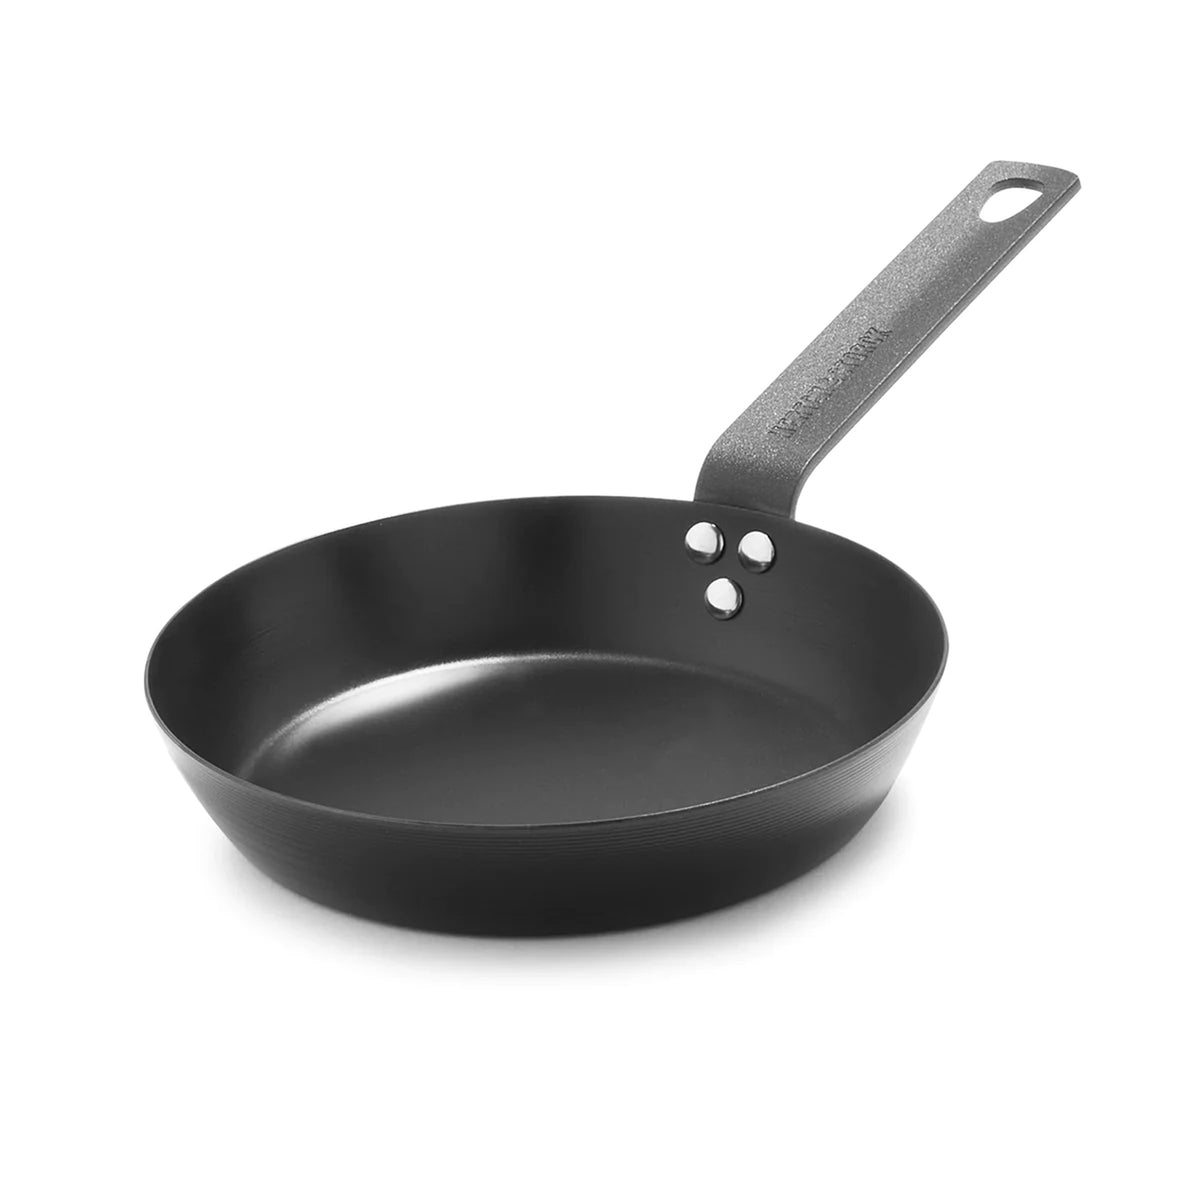 Seasoning Stainless Steel Non-Stick Pans 